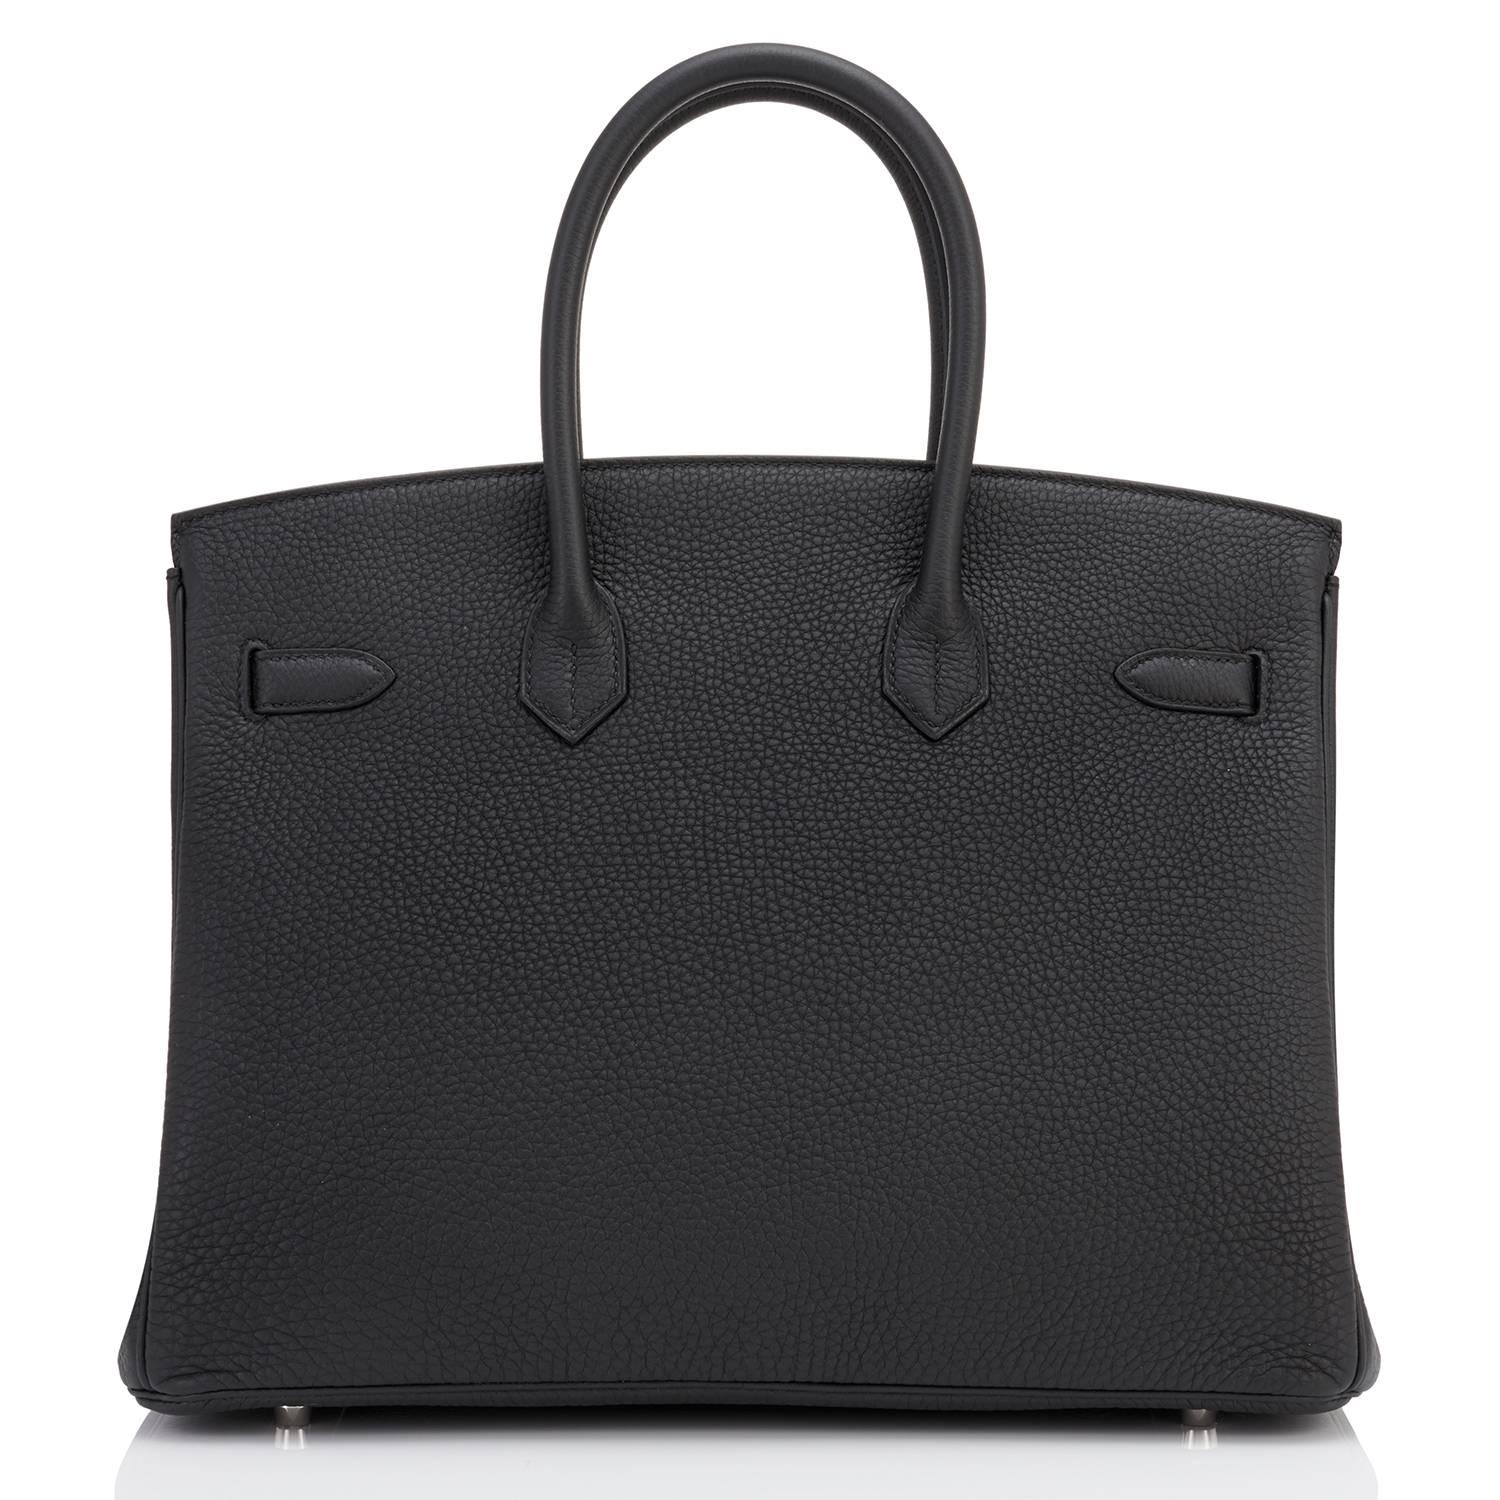 Hermes Birkin 35cm Black Togo Palladium Hardware Bag NEW 3